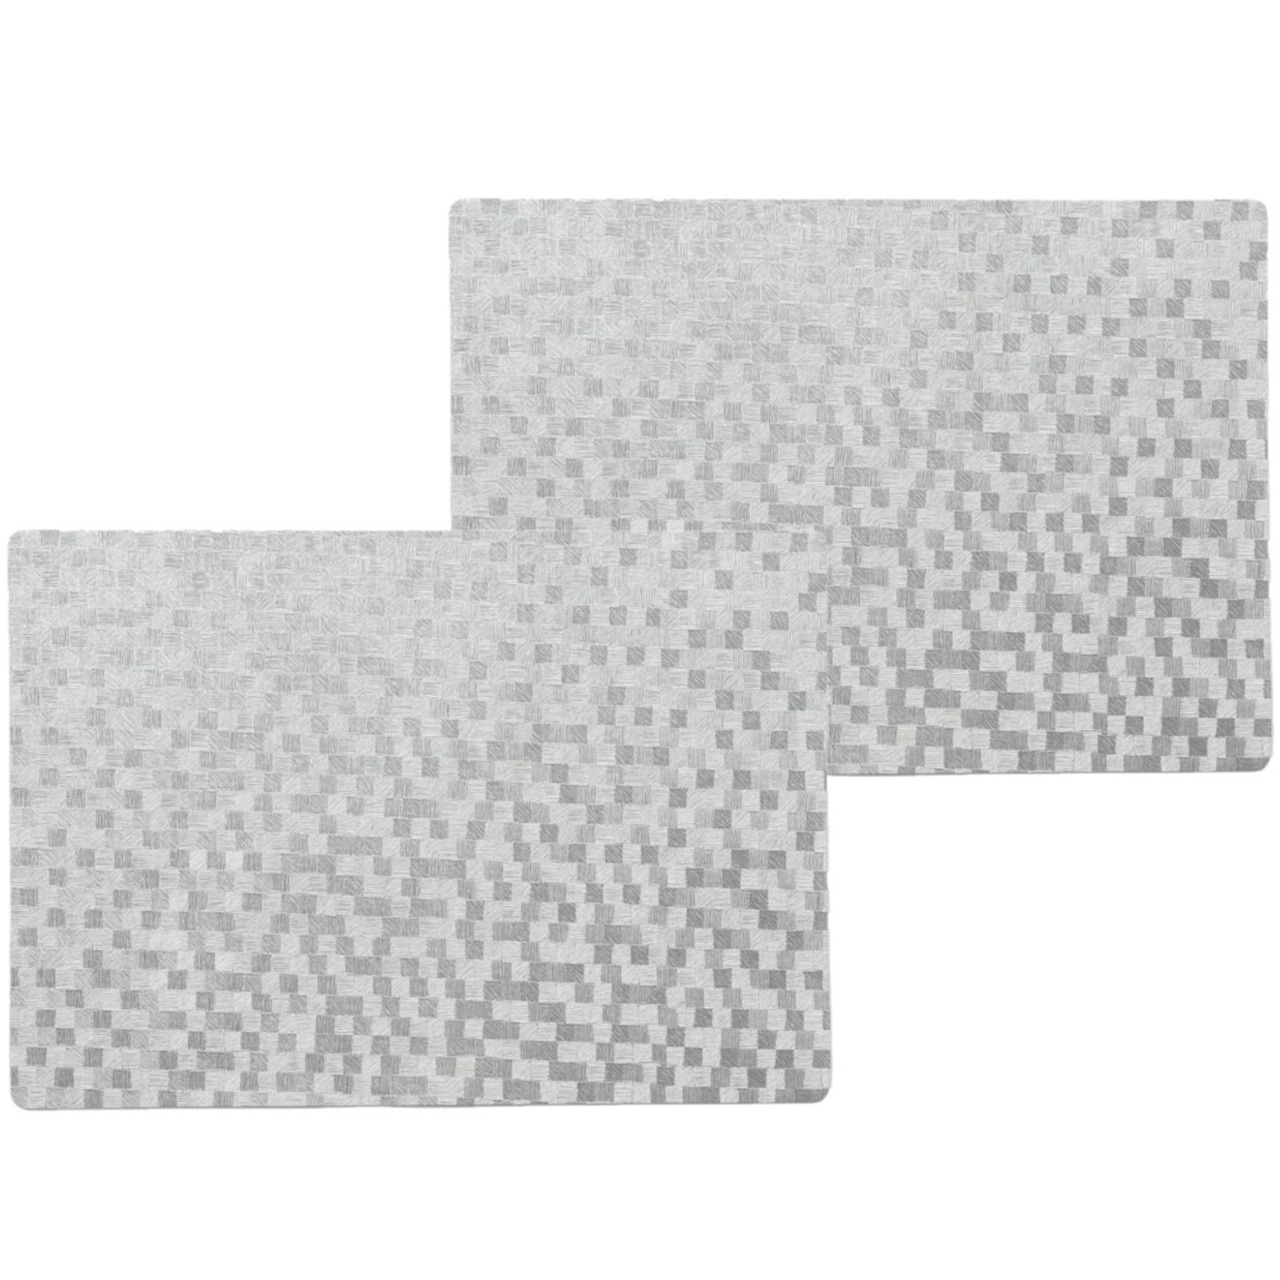 Wicotex 10x stuks stevige luxe Tafel placemats Stones zilver 30 x 43 cm -